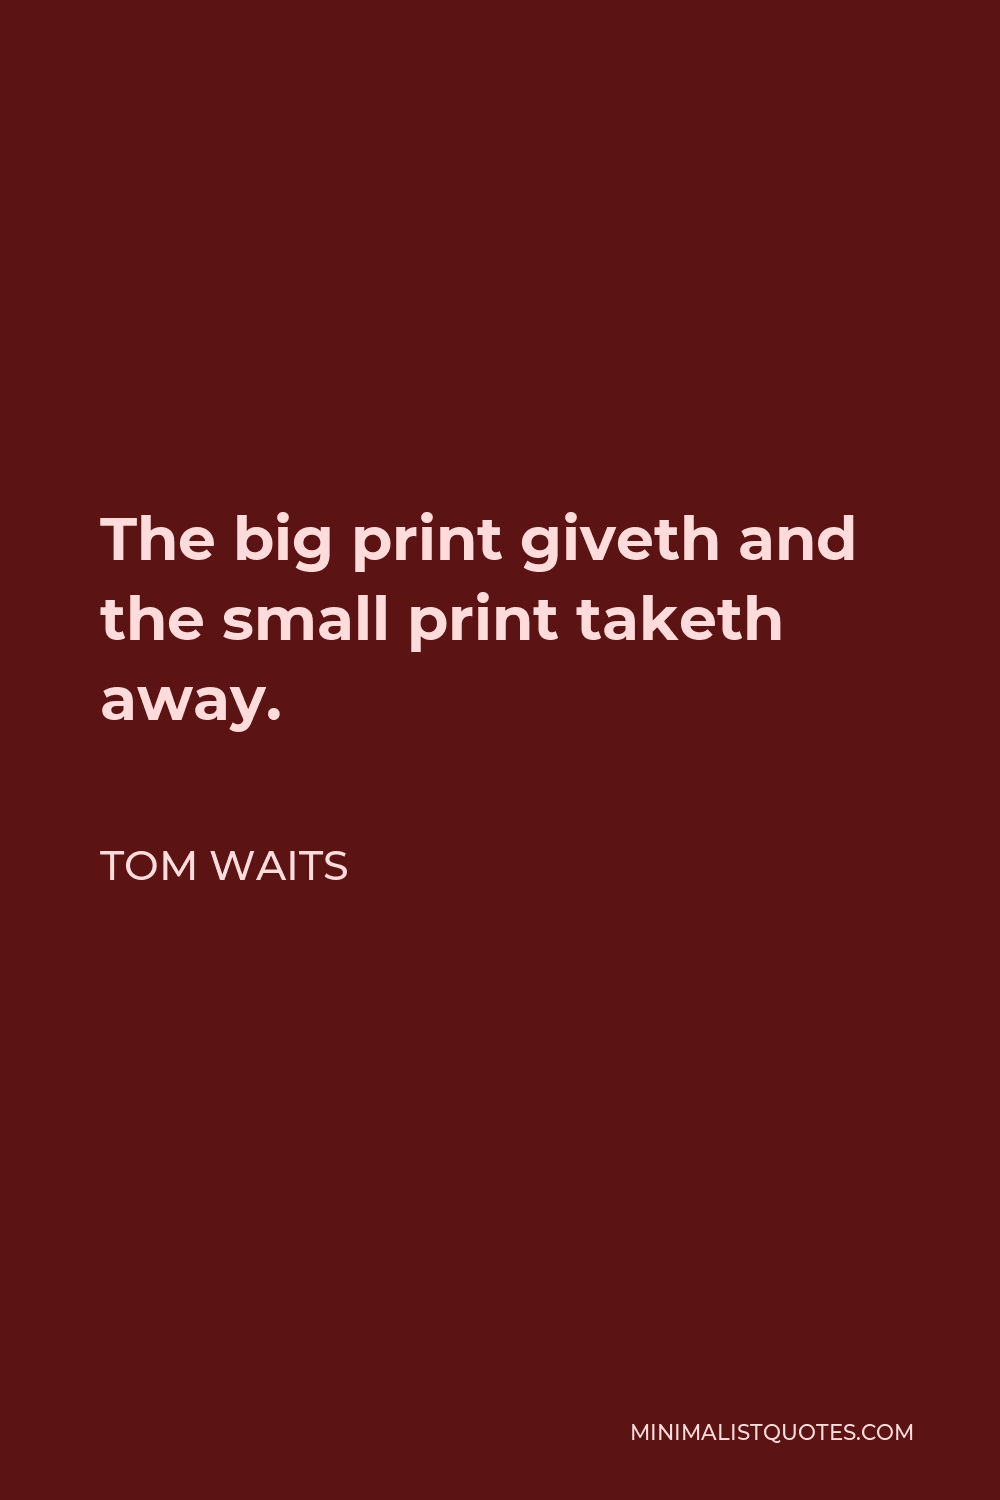 Tom Waits Quote - The big print giveth and the small print taketh away.